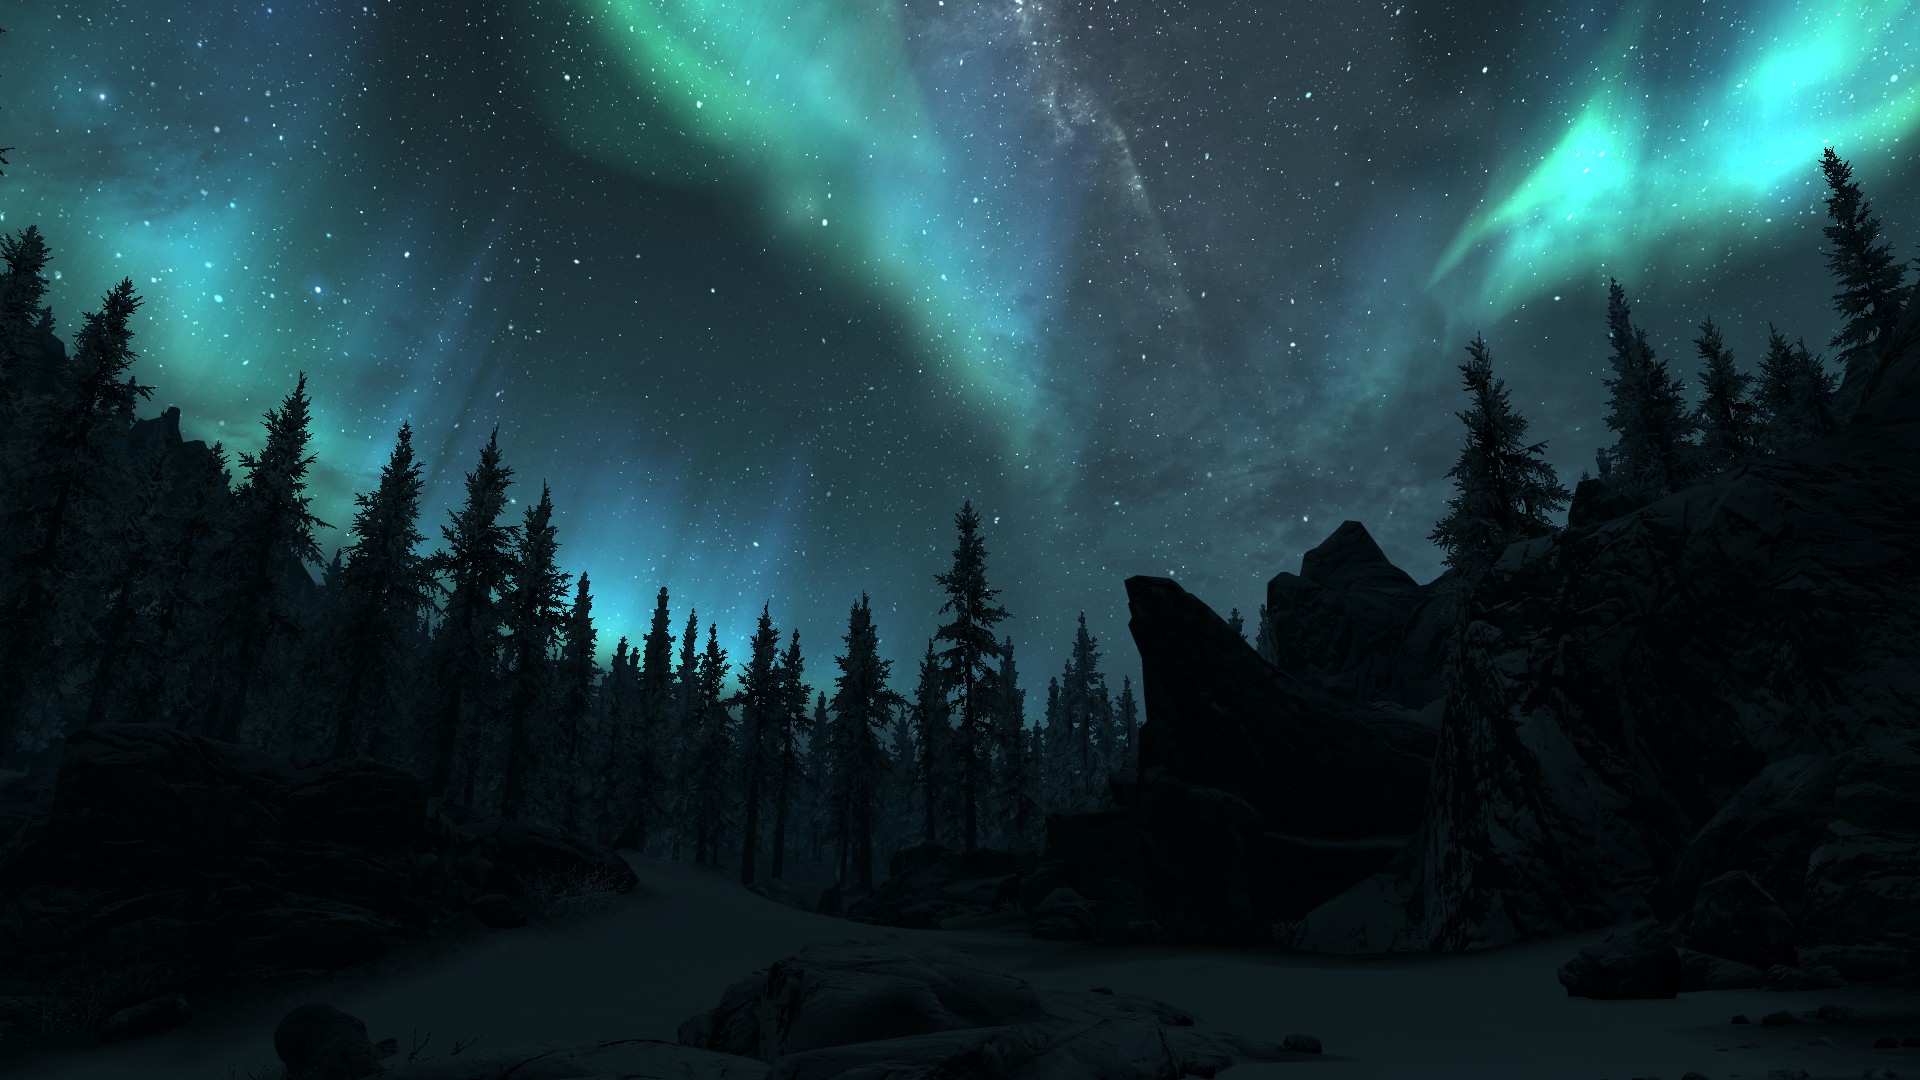 The Elder Scrolls V Skyrim Video Games Aurorae Trees Night Fantasy Art Polar Night Screen Shot 1920x1080